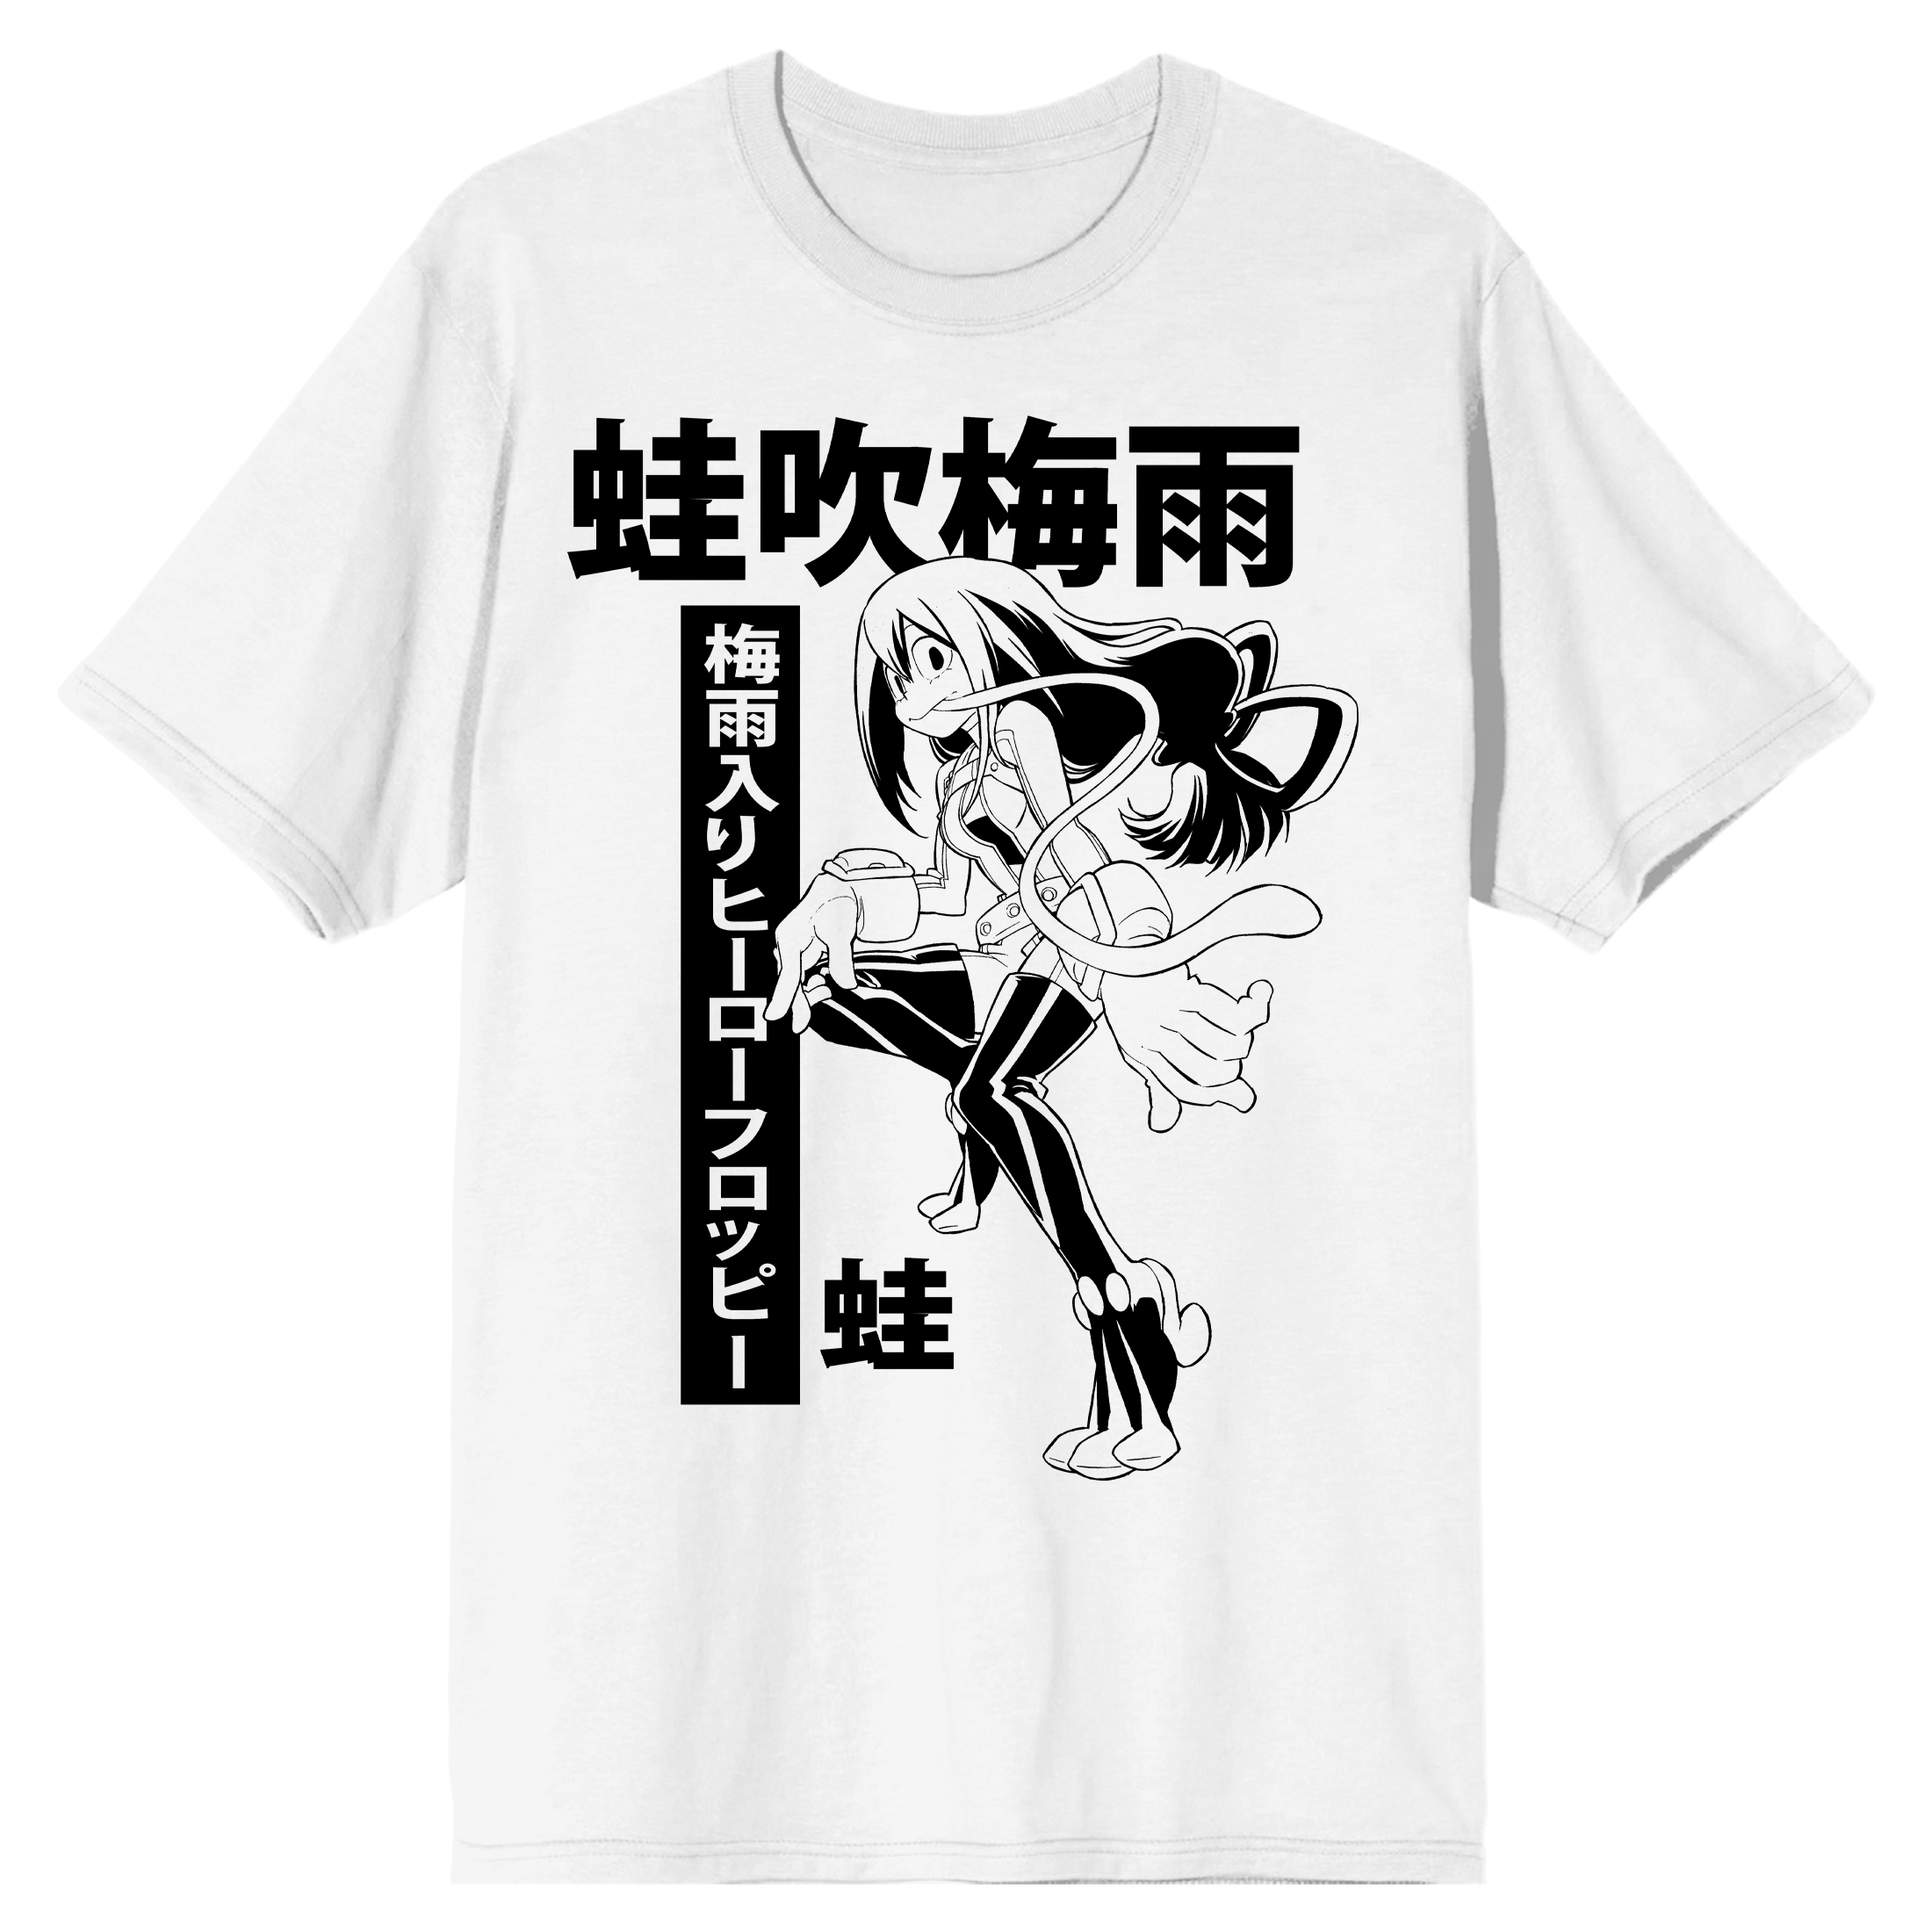 My Hero Academia Rainy Season Hero Froppy Men's White T-shirt-XL - image 2 of 4